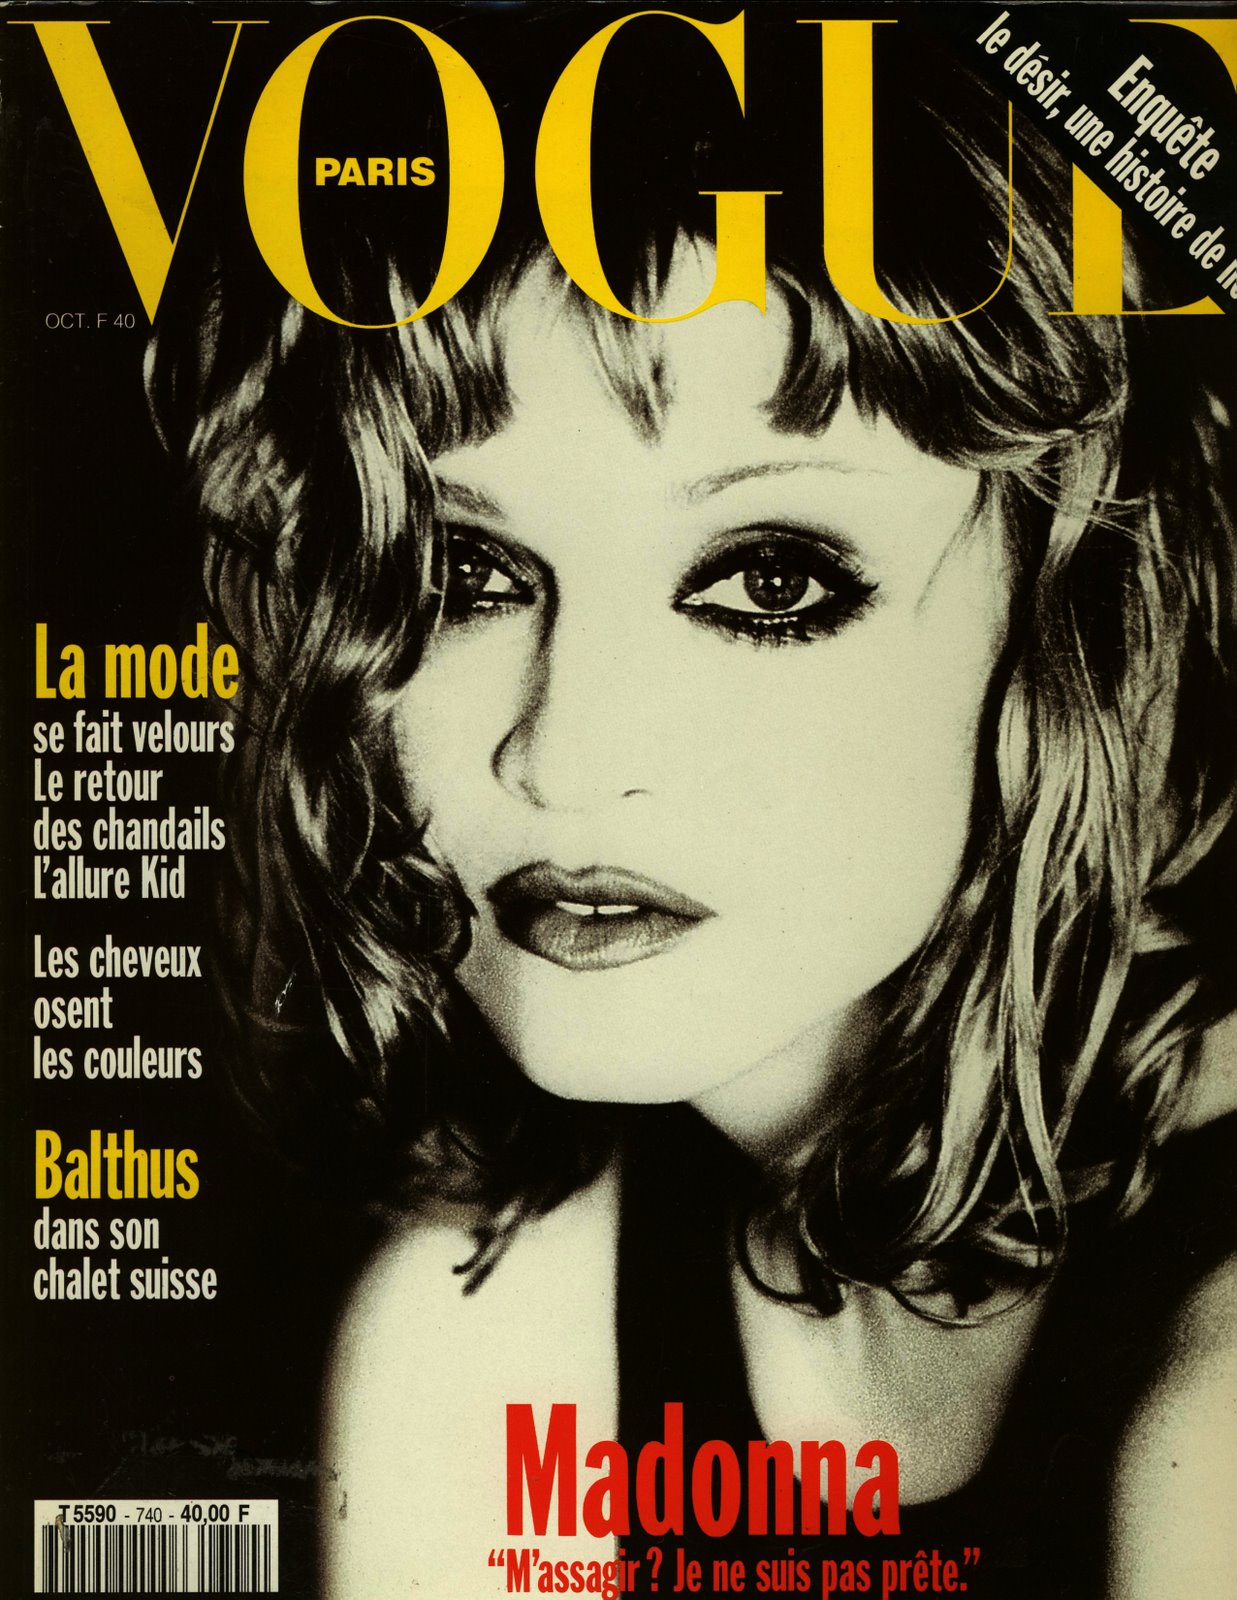 Pud Whacker's Madonna Scrapbook: Paris Vogue October 1993